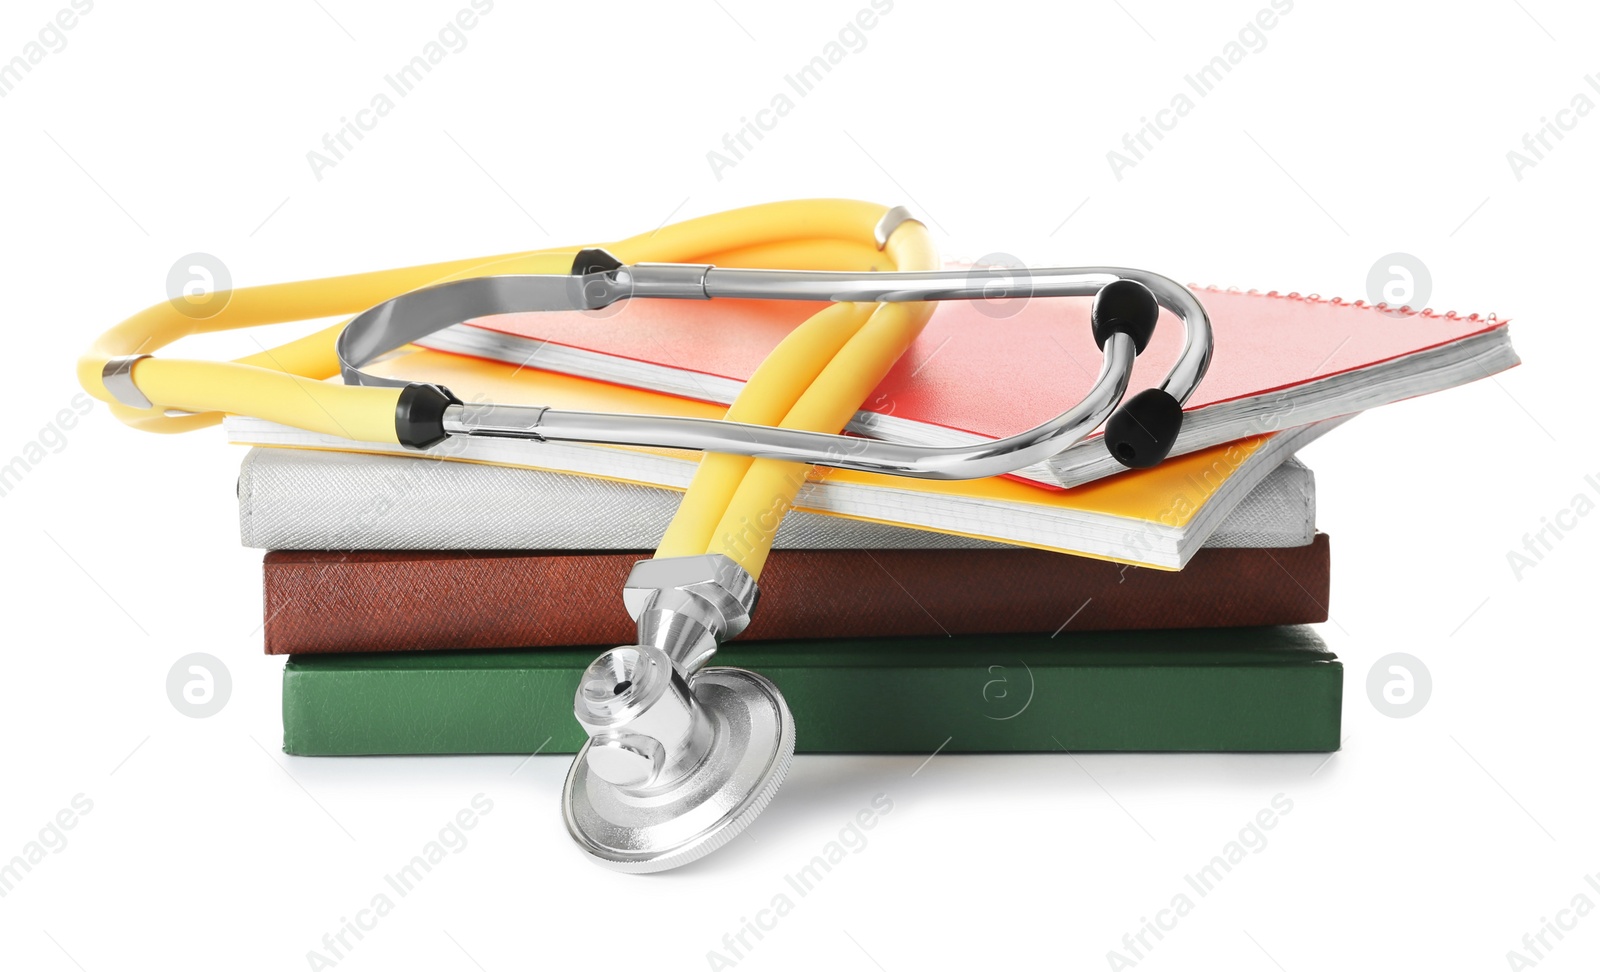 Photo of Stethoscope and notebooks on white background. Medical students stuff